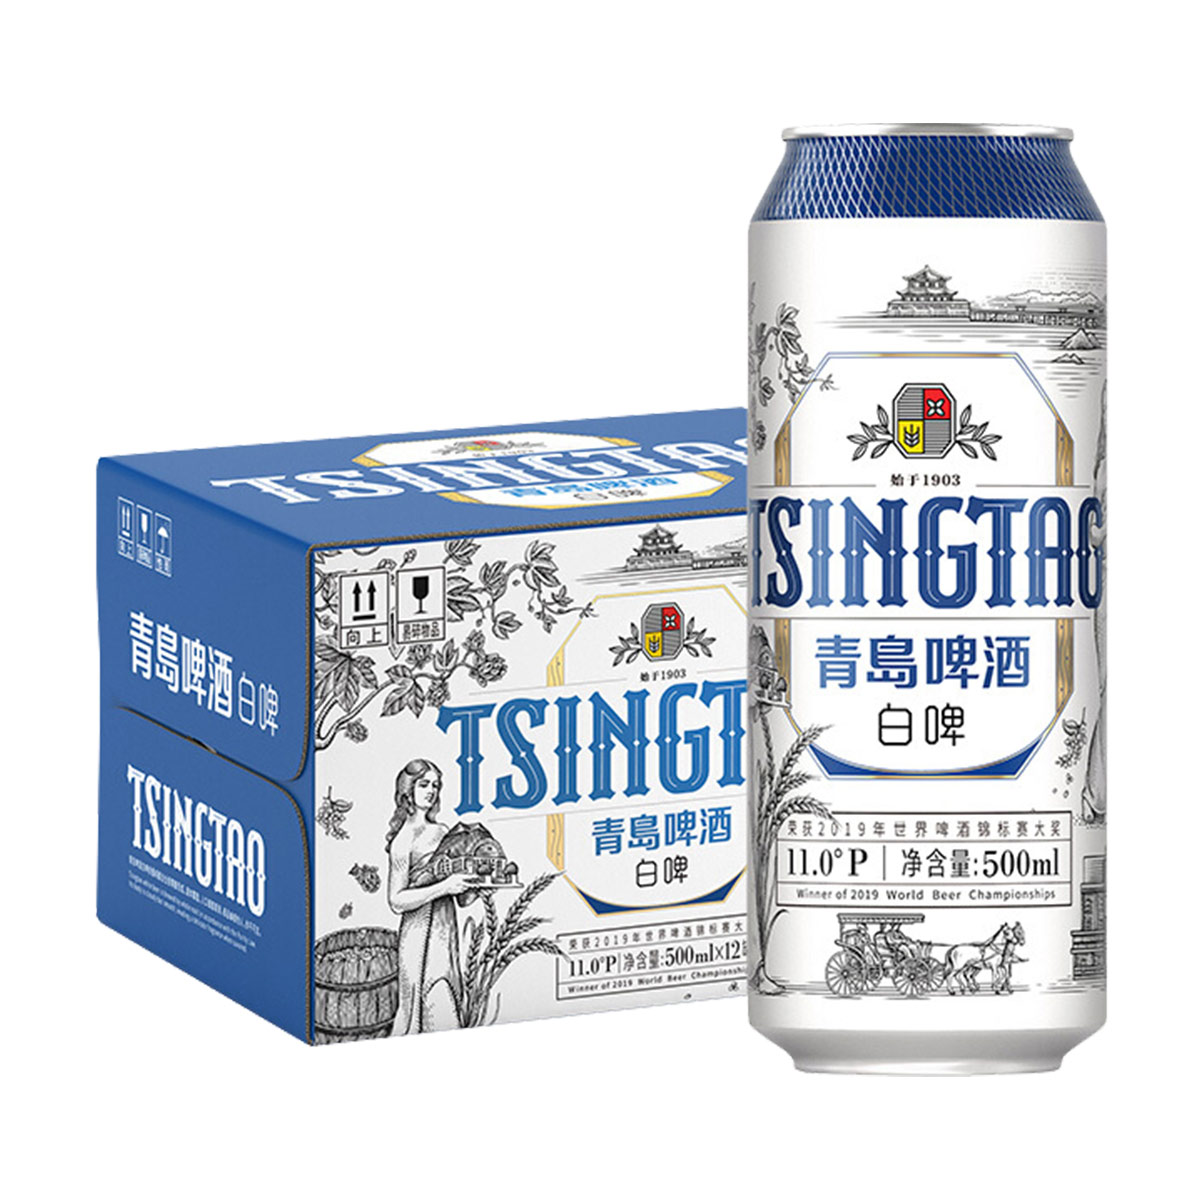 TSINGTAO 青岛啤酒 全麦白啤11度 德式小麦白啤酒 500mL 12罐+苏打水380ml*6瓶 62.86元